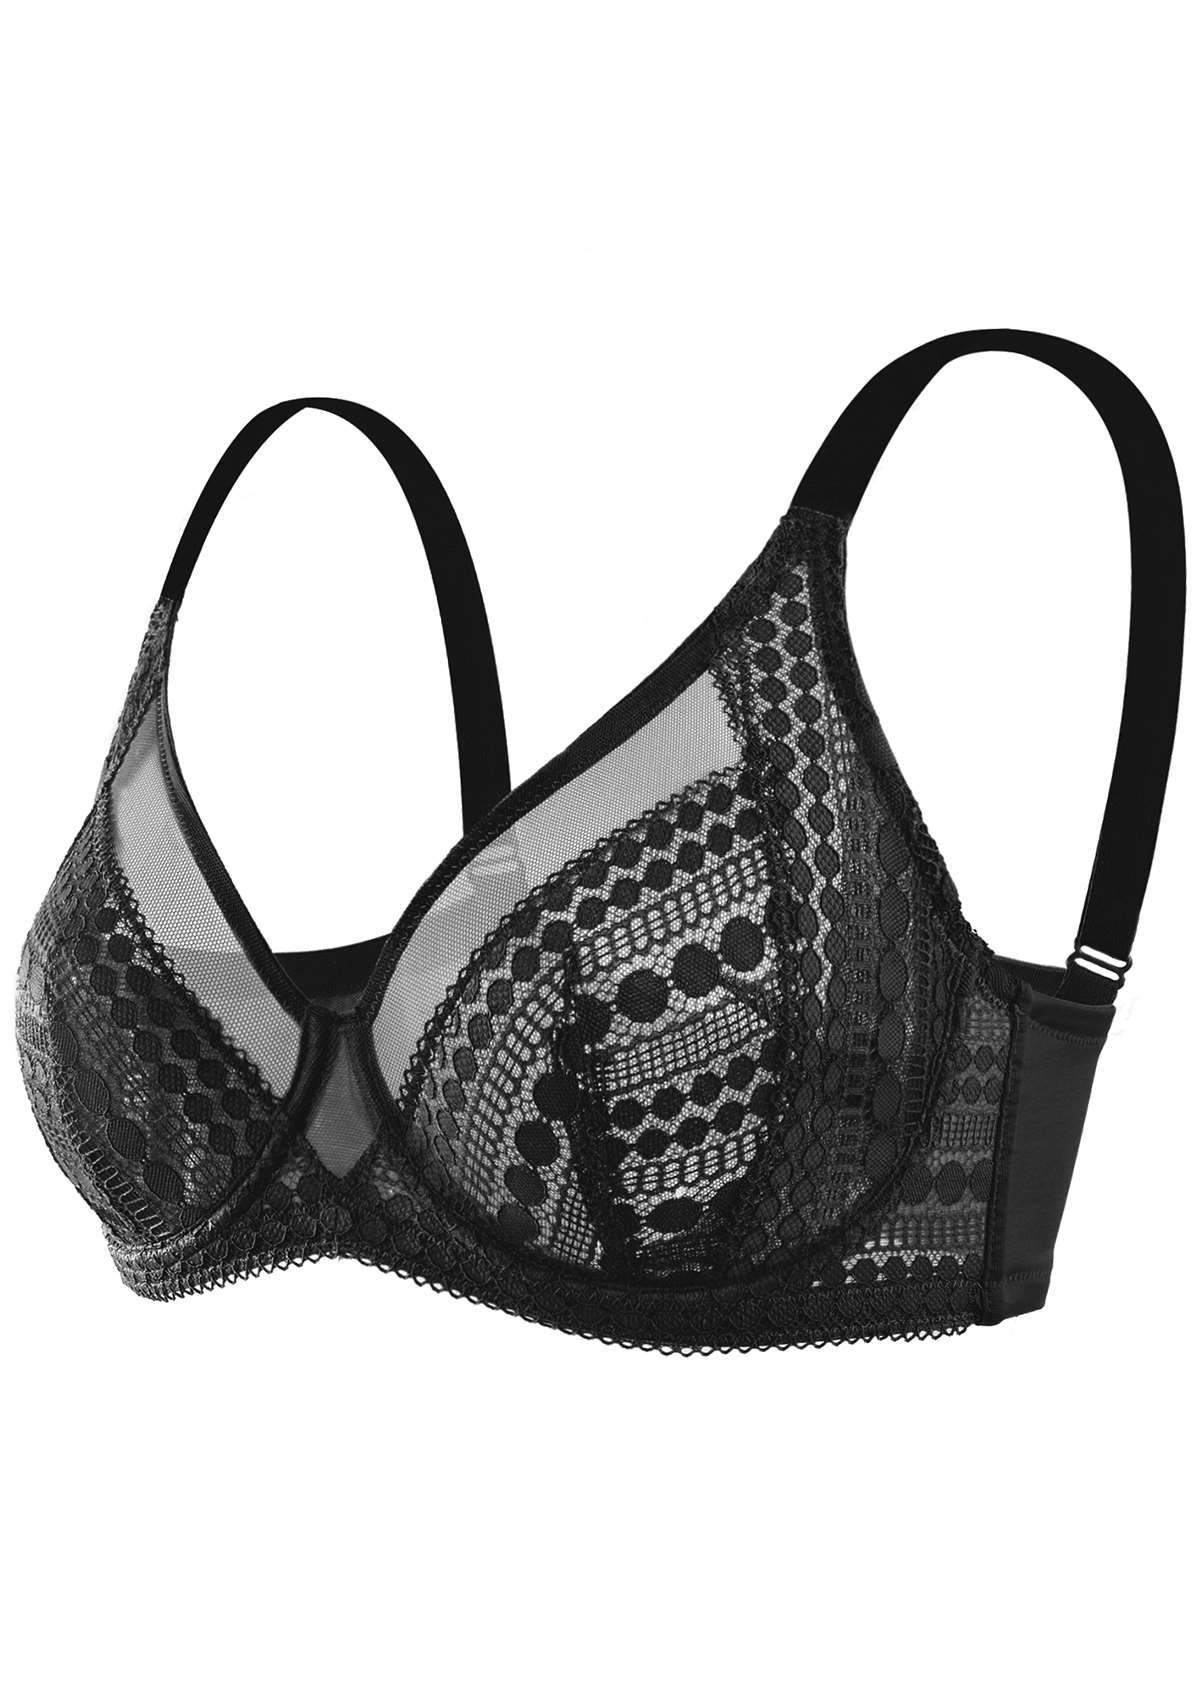 HSIA Heroine Matching Bra And Panties: Unlined Lace Unpadded Bra - Black / 42 / DDD/F